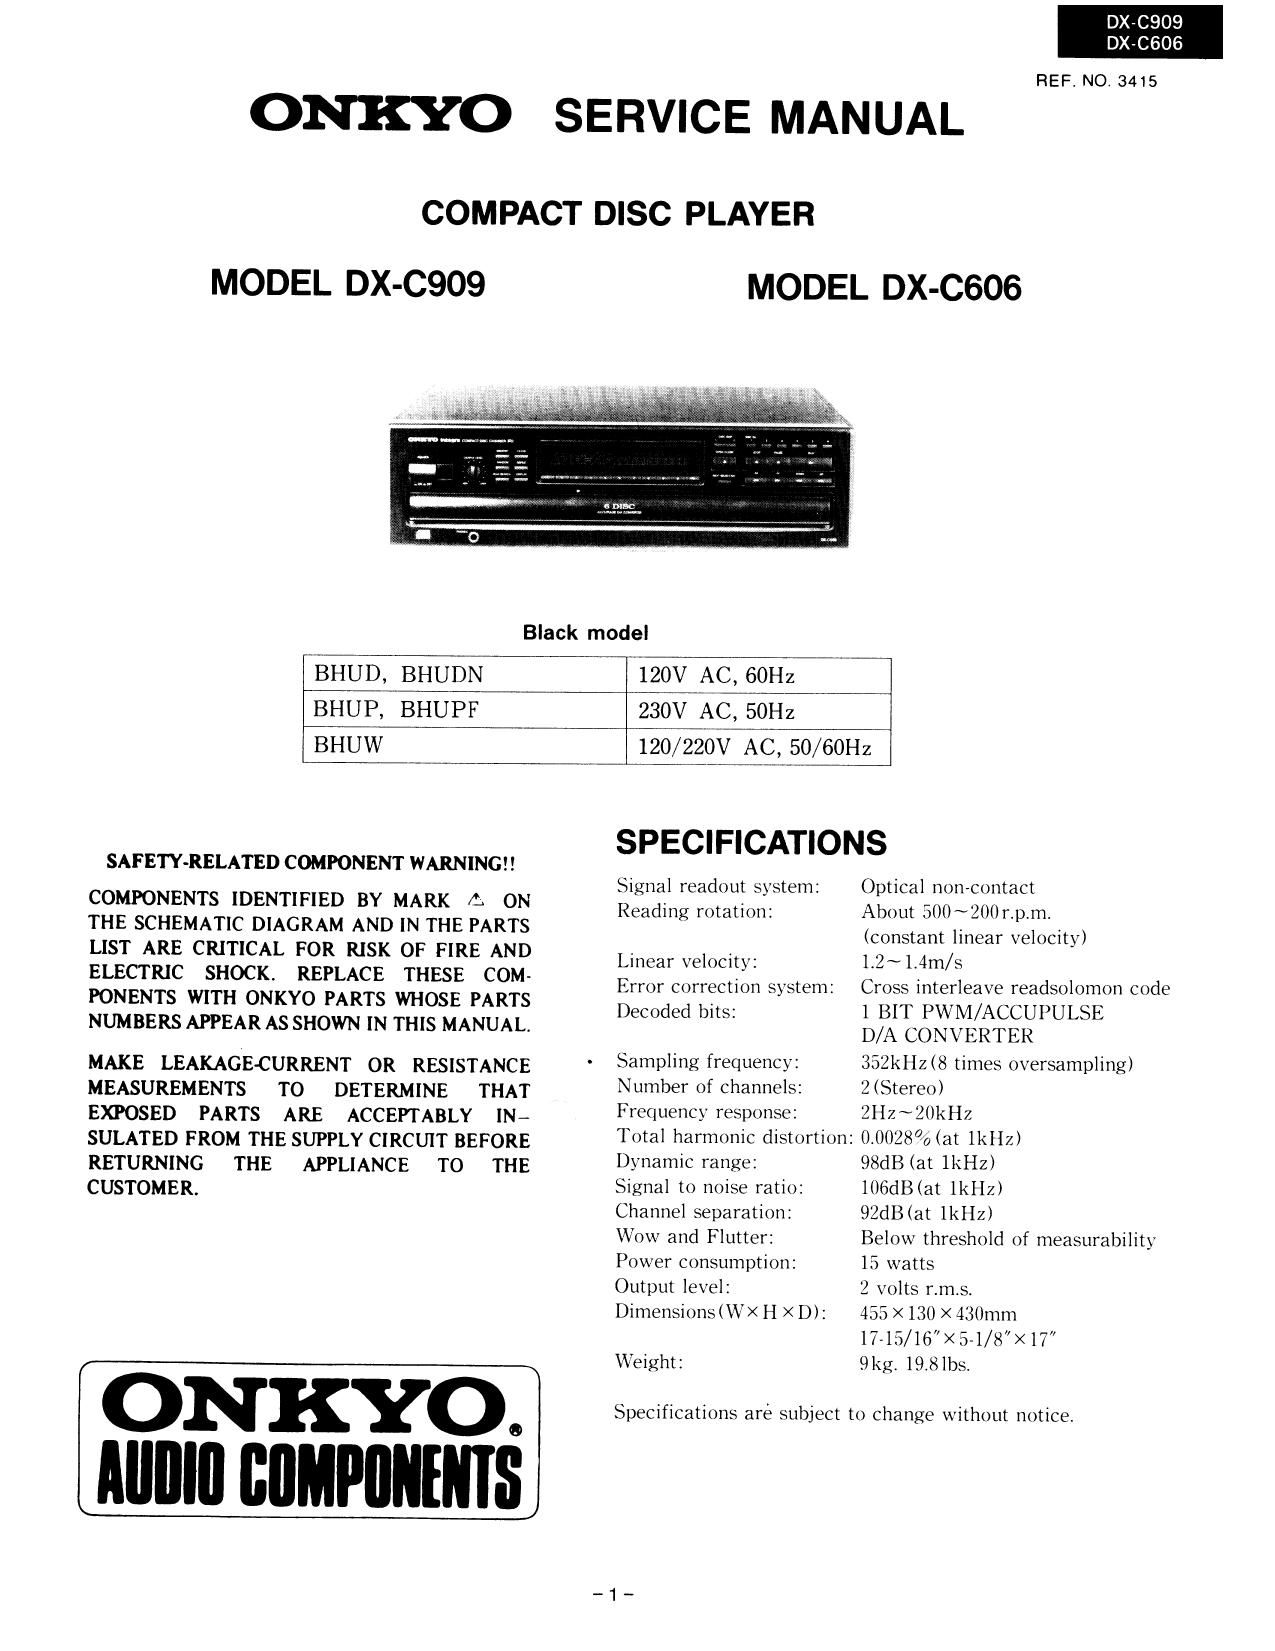 Onkyo DXC 606 Service Manual